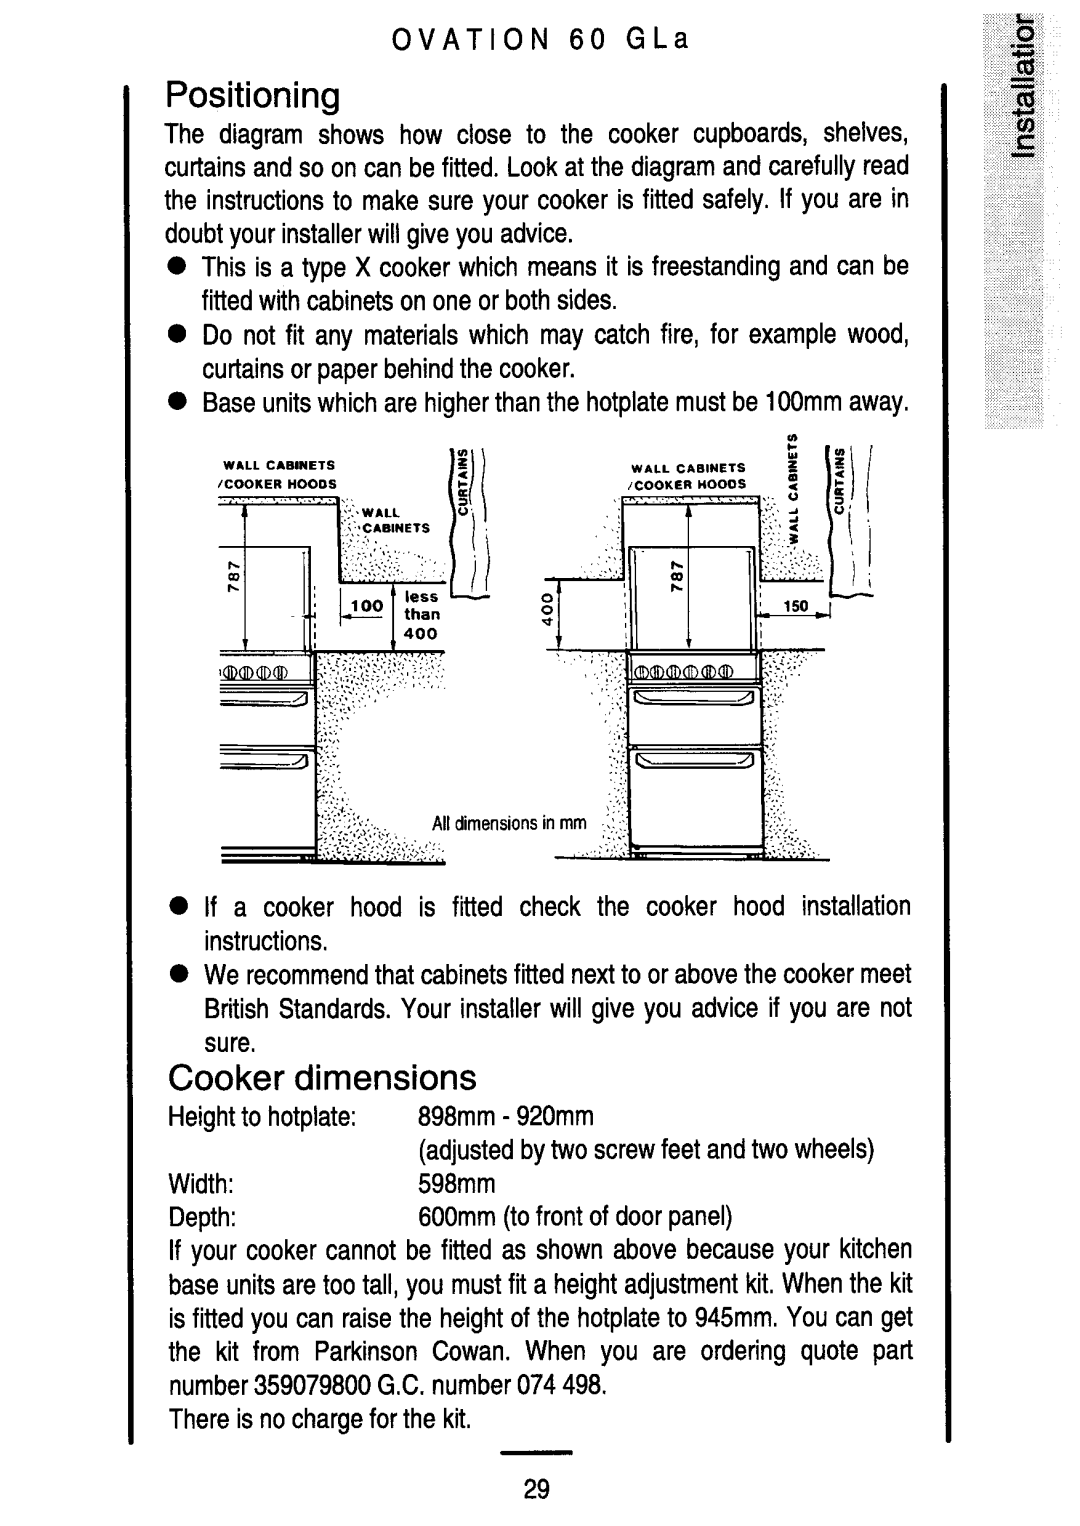 Electrolux 60 GLa manual 